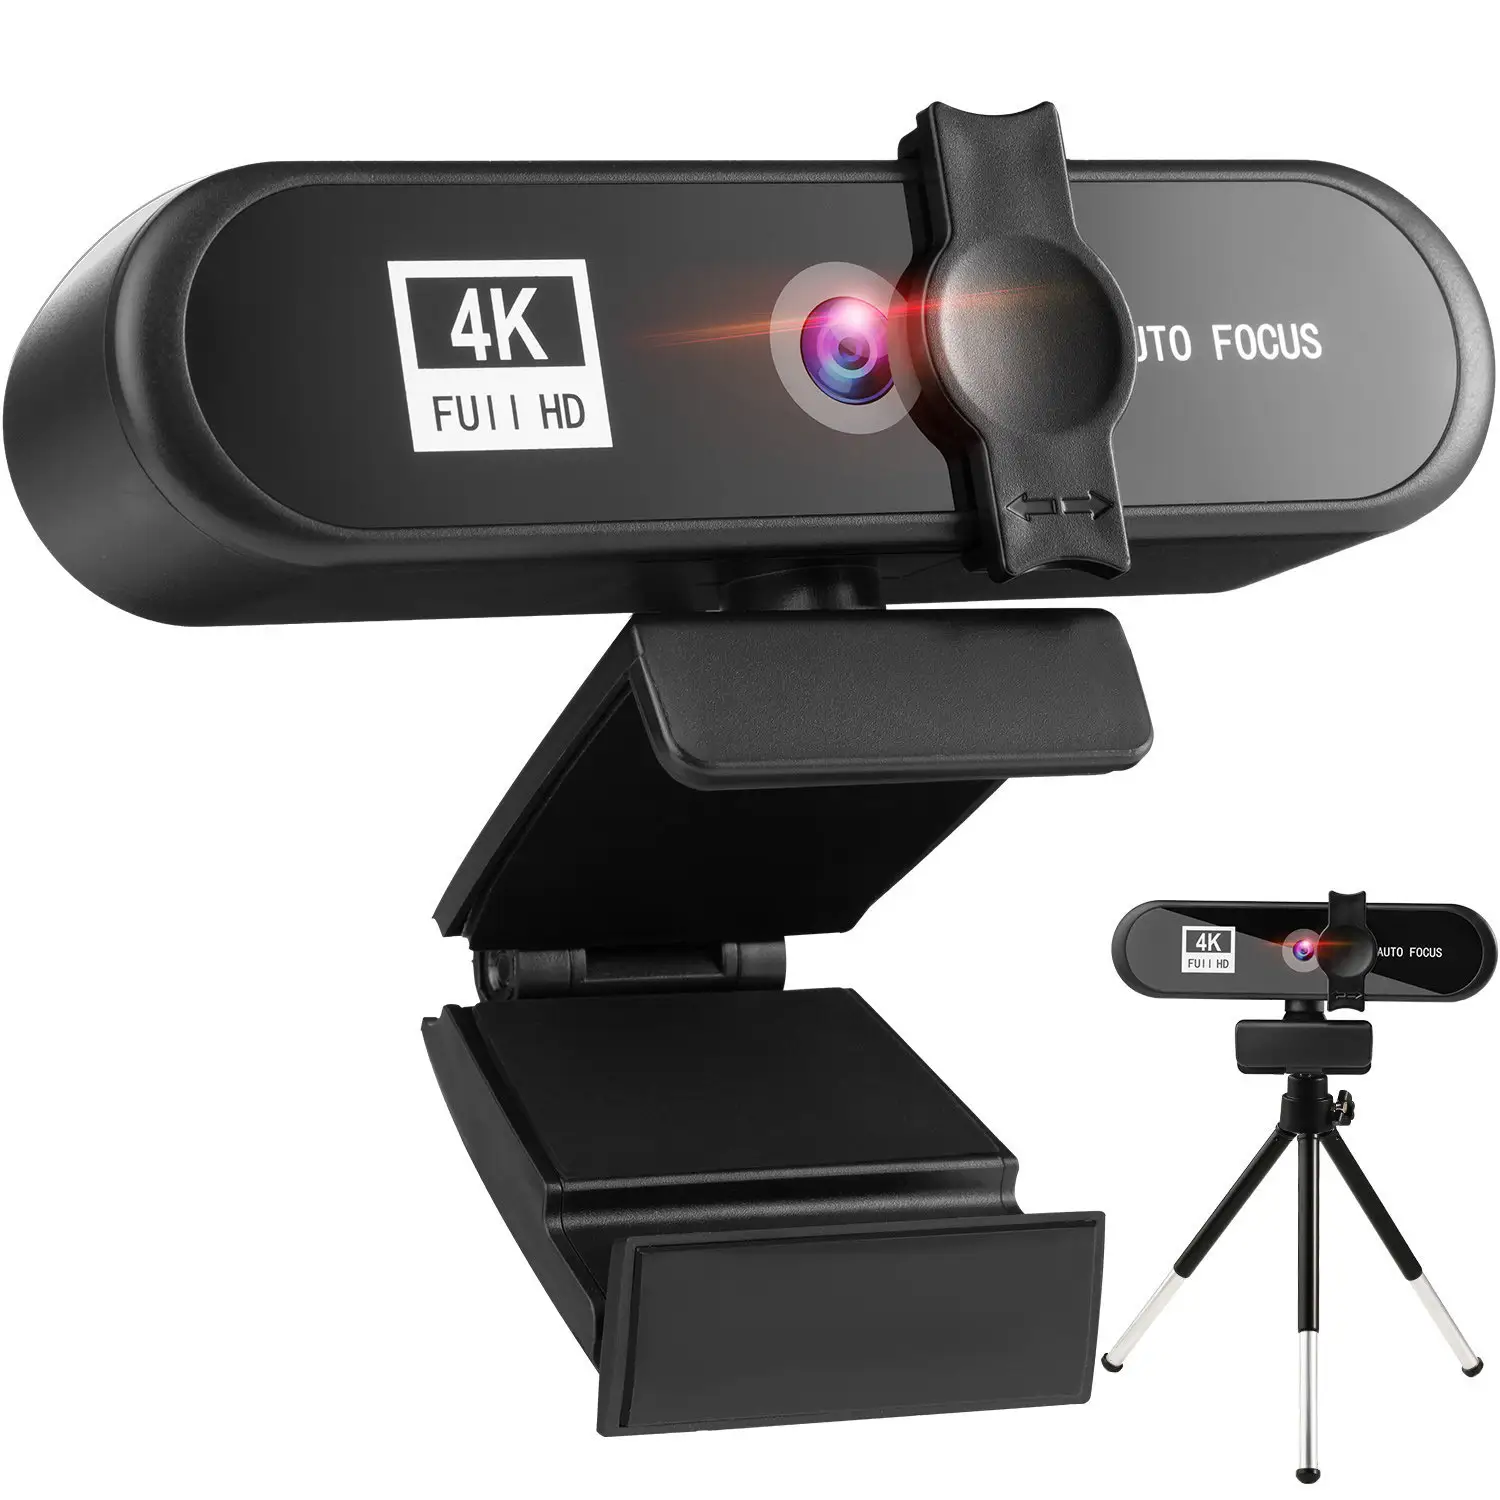 Web USB Camera Zoom Full HD 1K 2K 4K Conference PC Webcam Rotation Autofocus Internet For Laptop Camera PC Cover Supplier